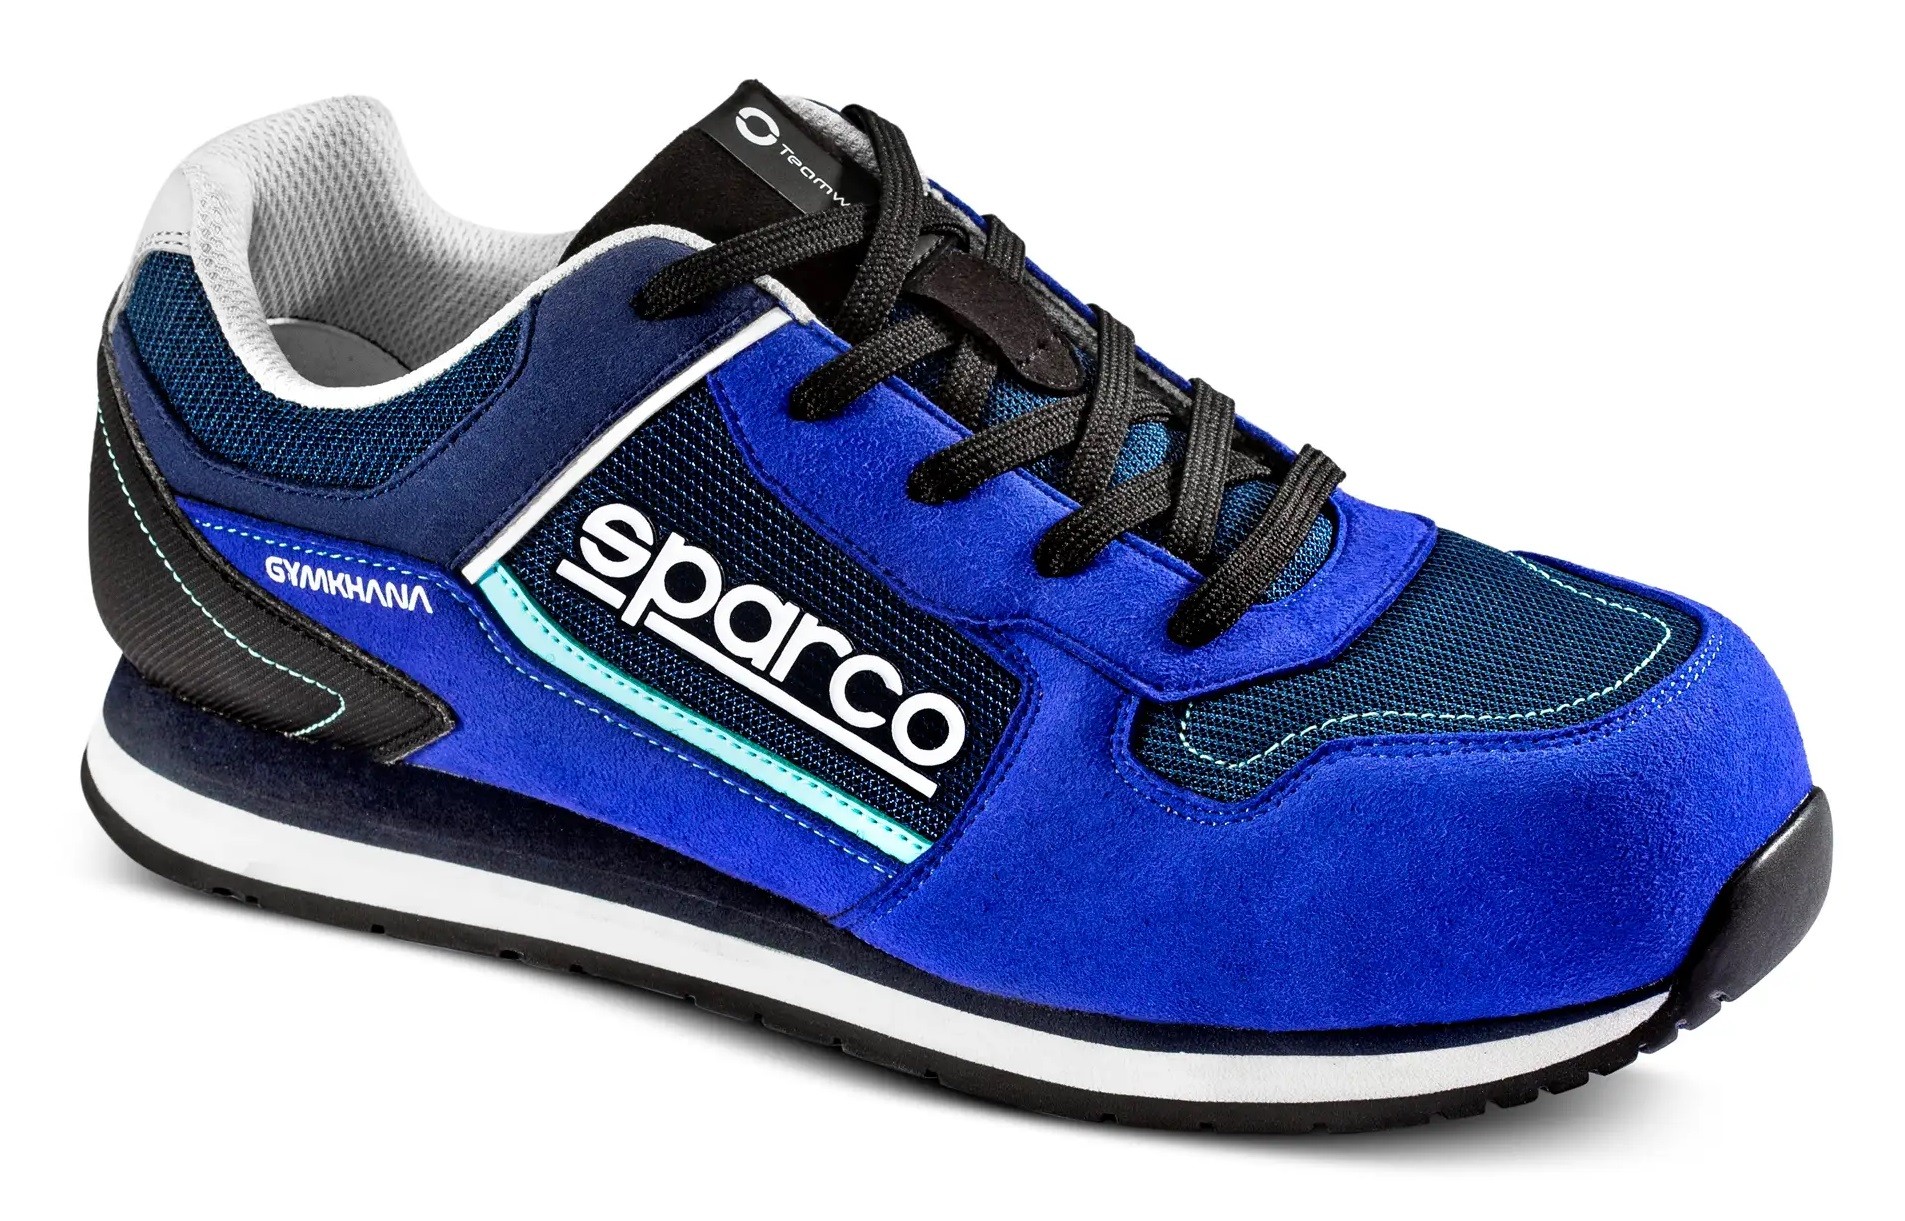 Zapatos Sparco Nitro PETTER S3 + Calcetines de regalo